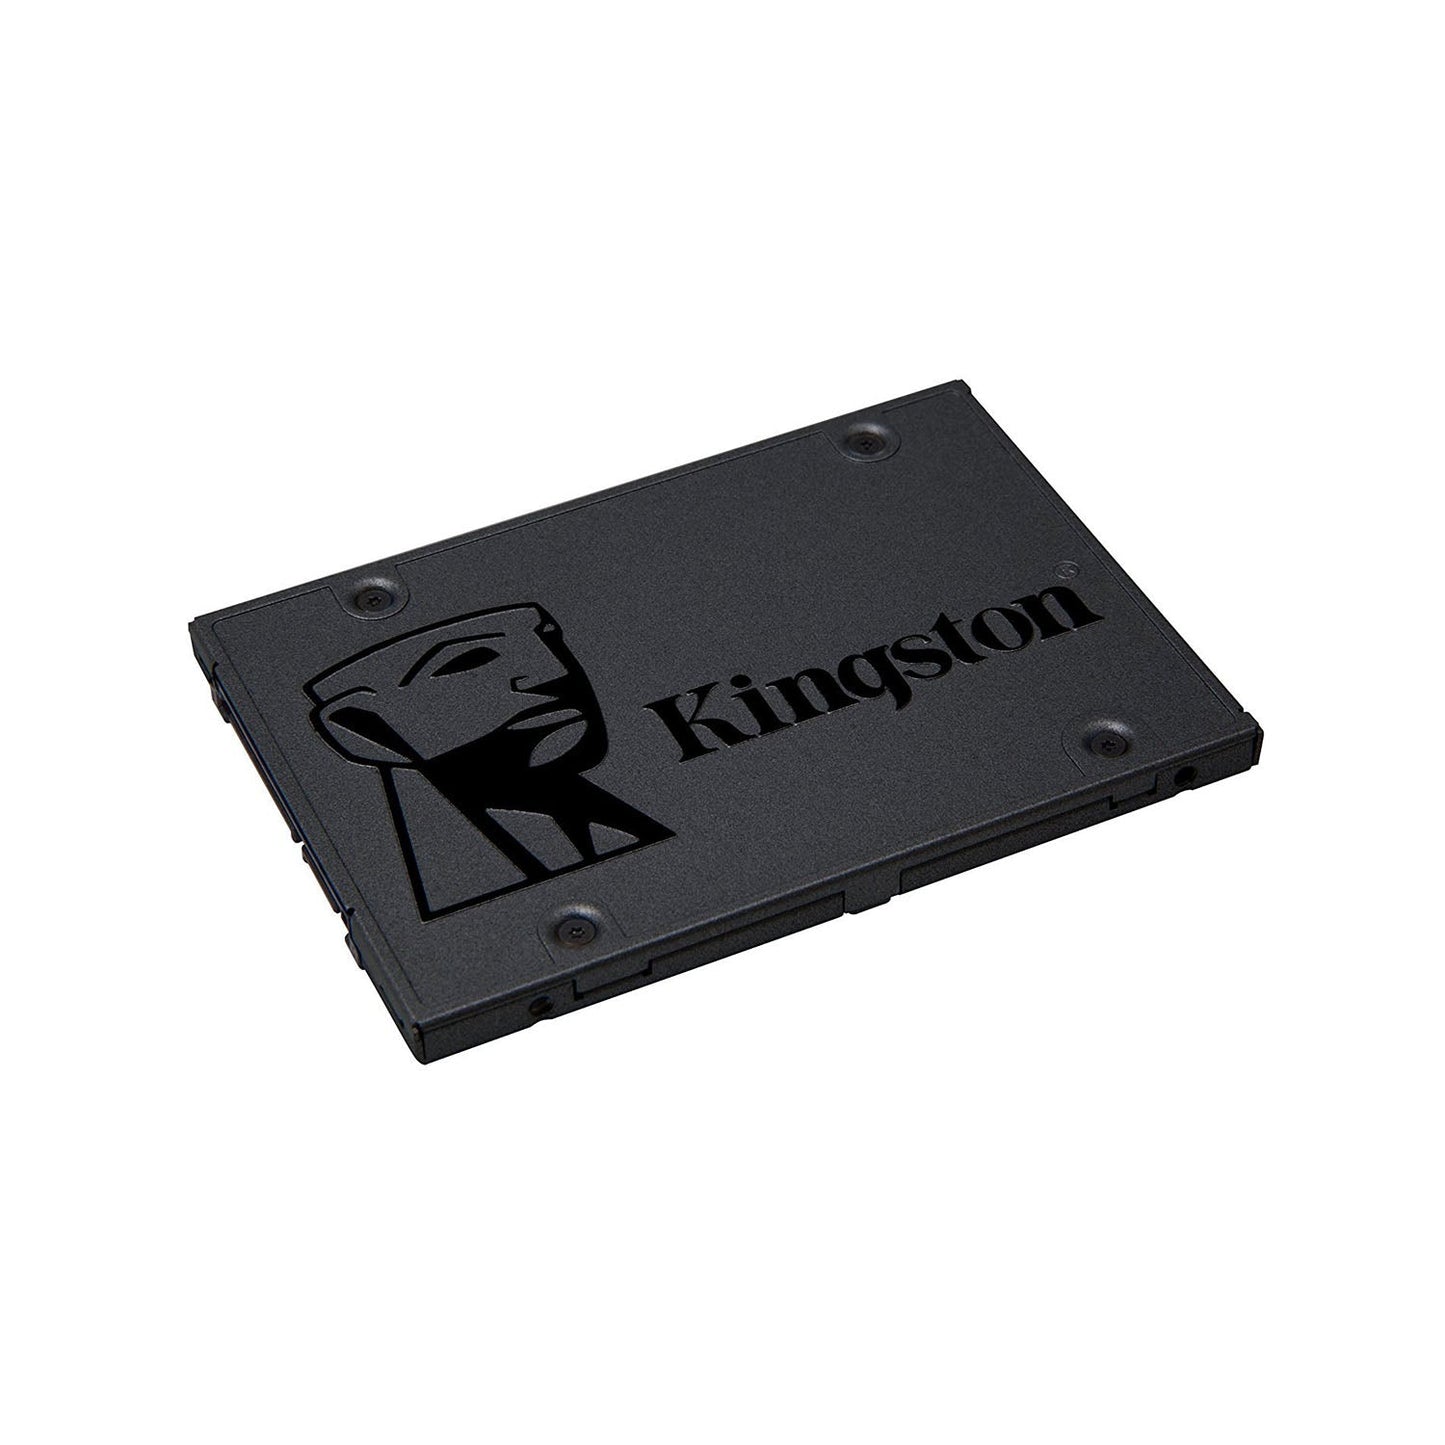 Kingston A400 960GB 2.5-inch SATA Internal Solid State Drive